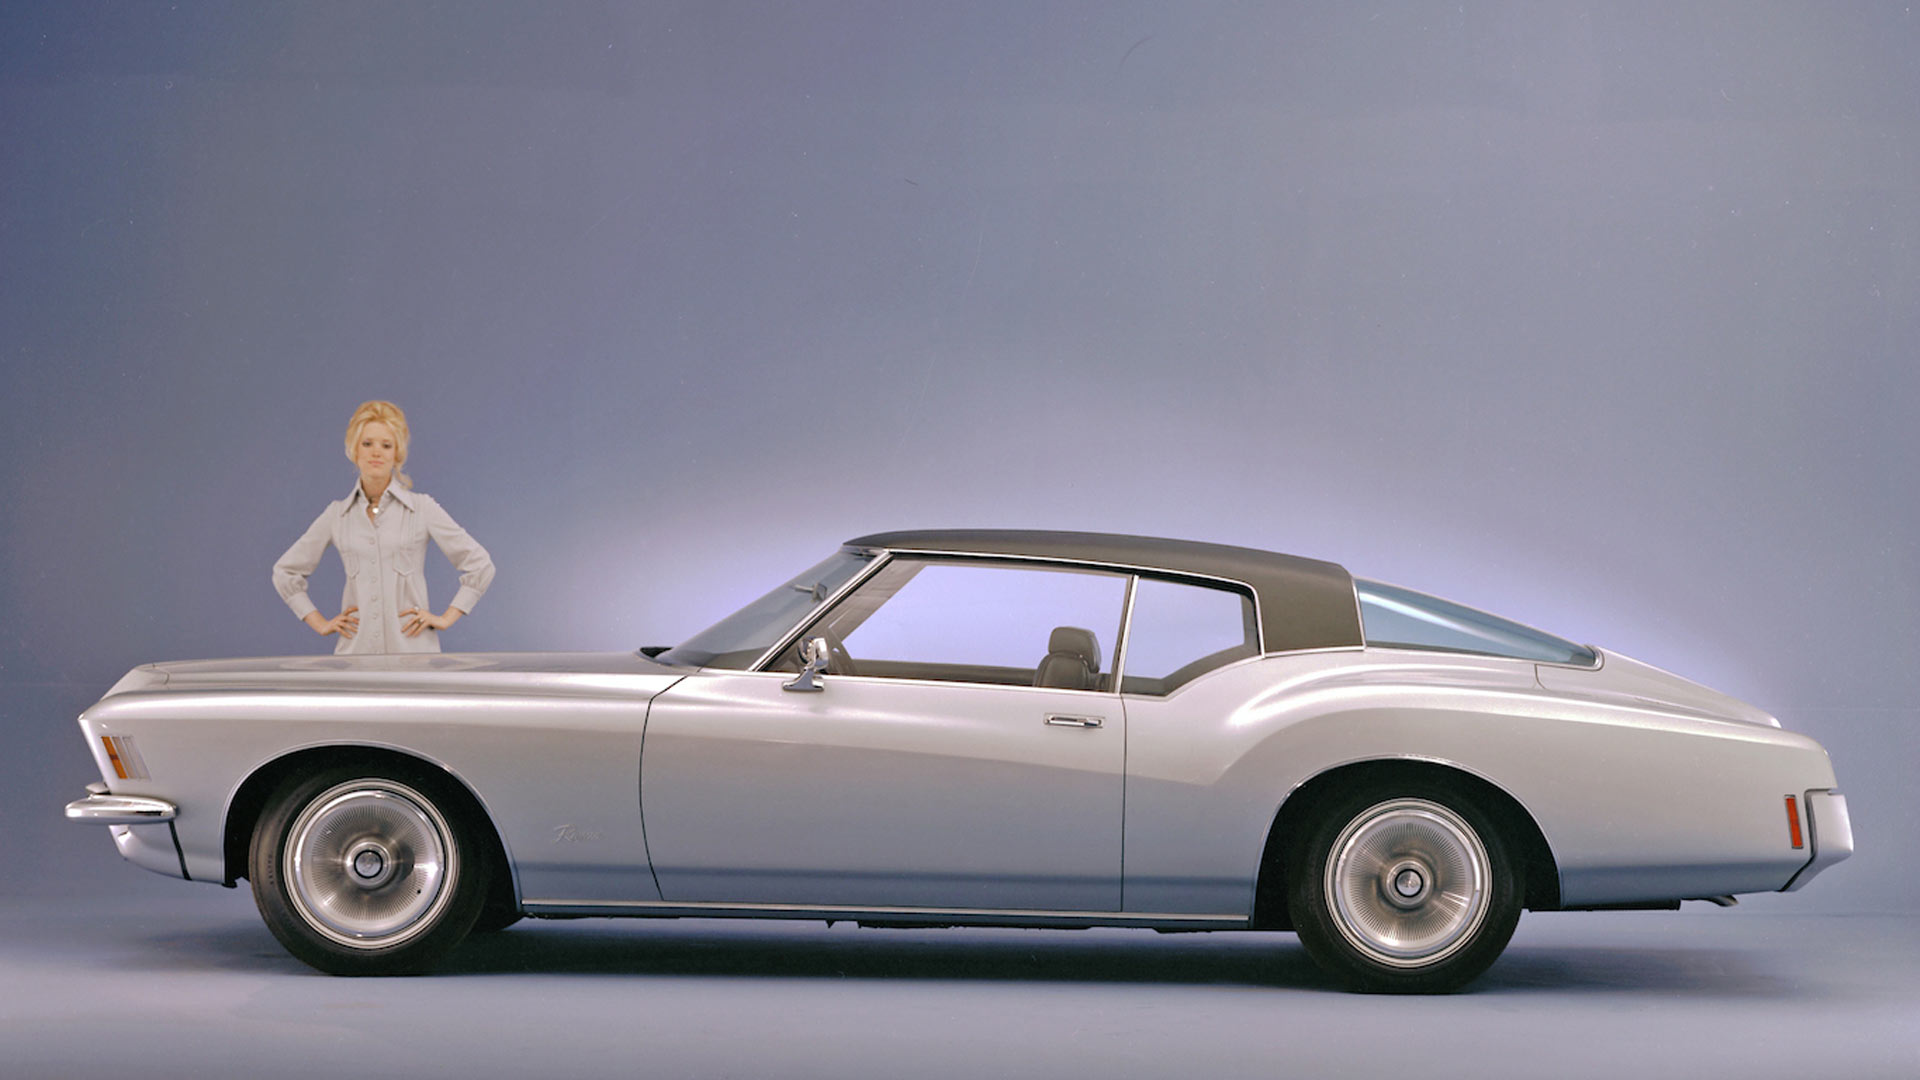 1971 Buick Riviera – 217.4 inches